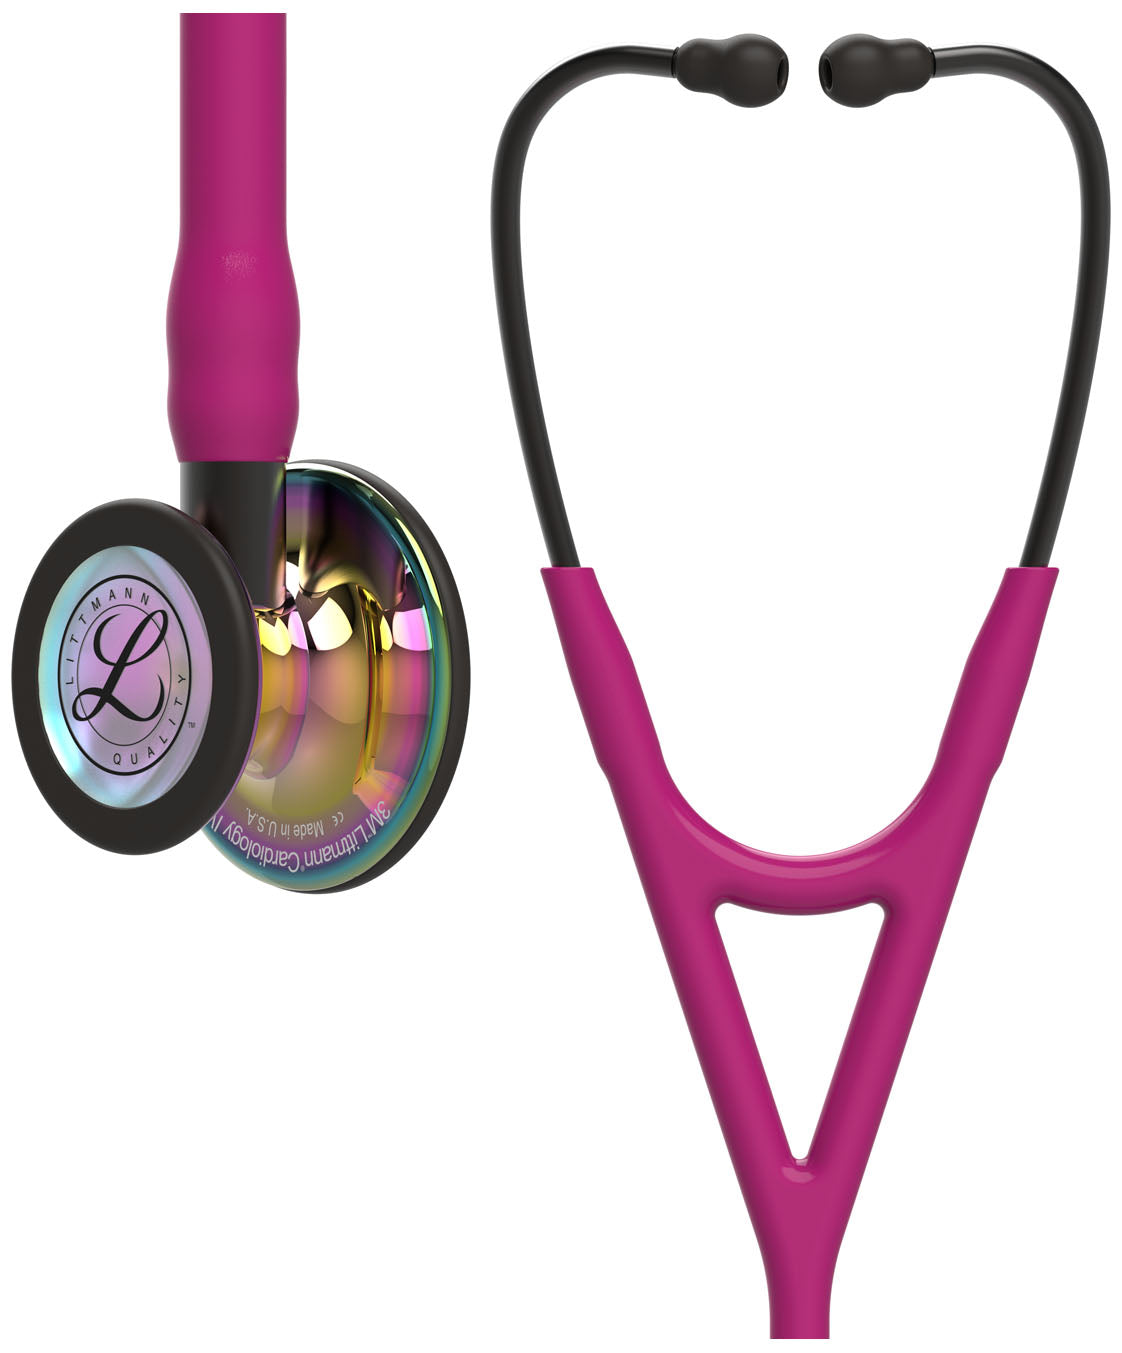 Littmann Cardiology lV Stethoscopes (20 special colors)